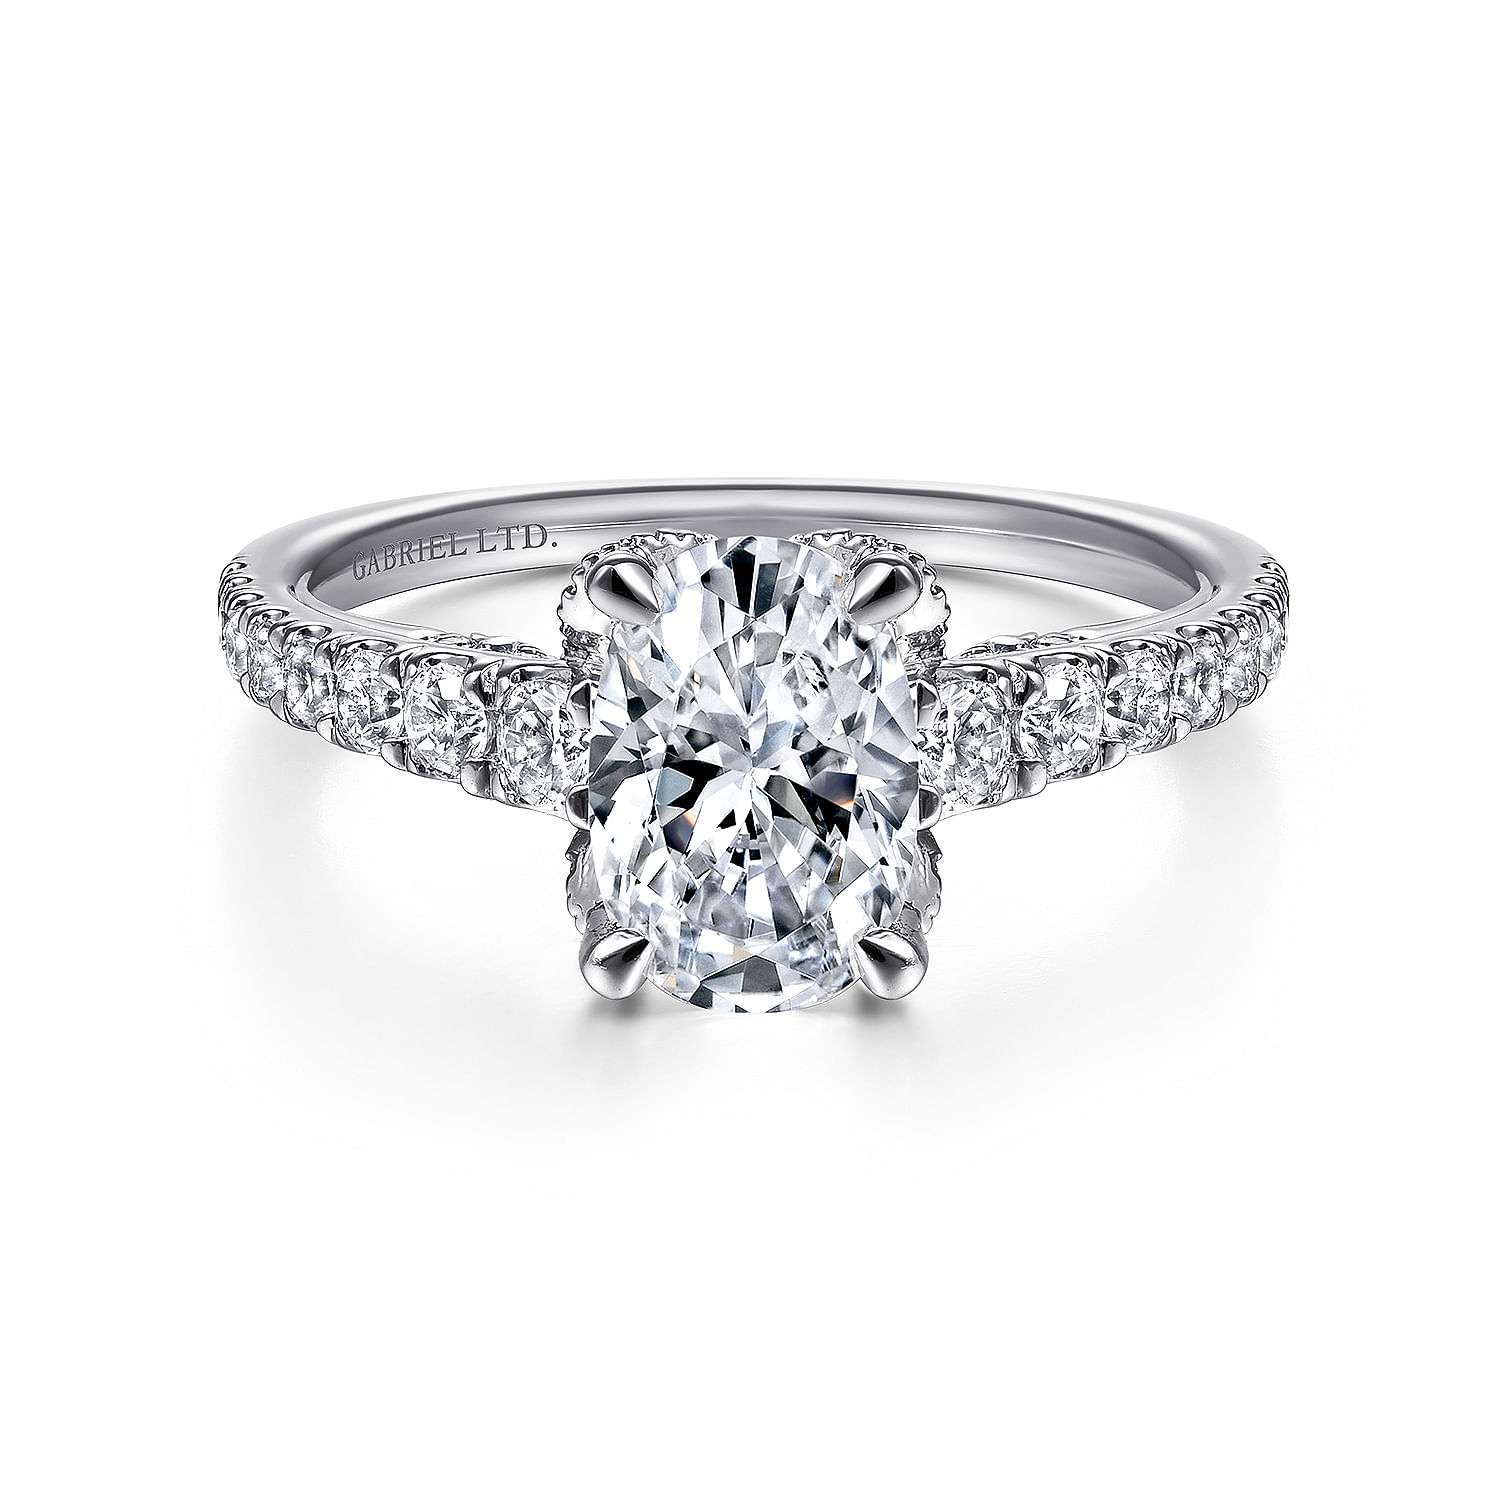 Herschel---18K-White-Gold-Oval-Diamond-Engagement-Ring1